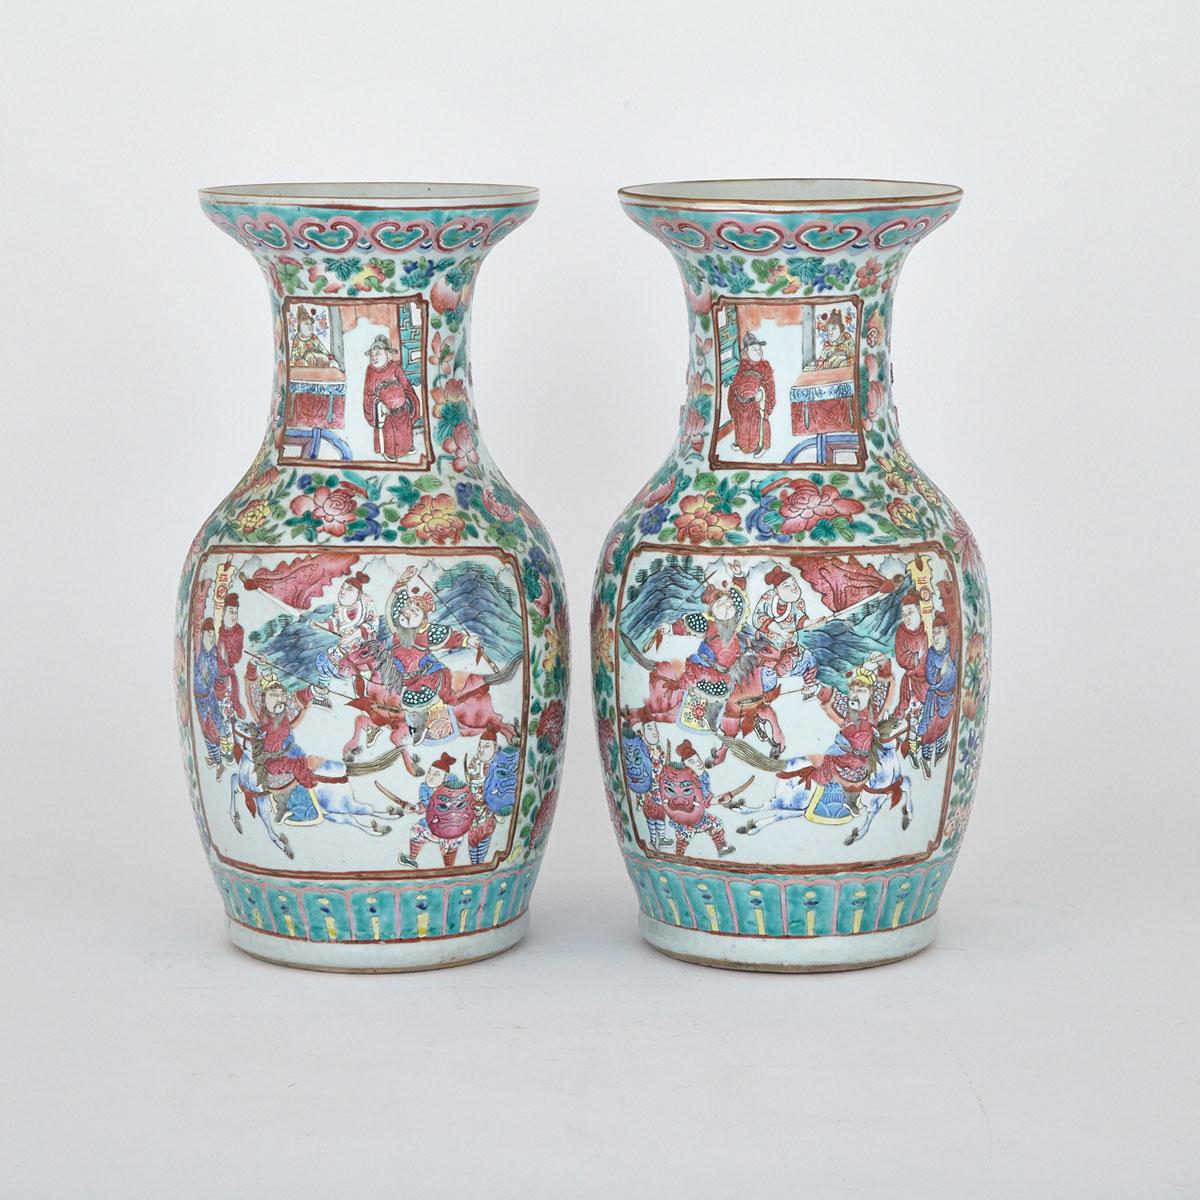 Pair of Famille Rose Vases, 19th Century